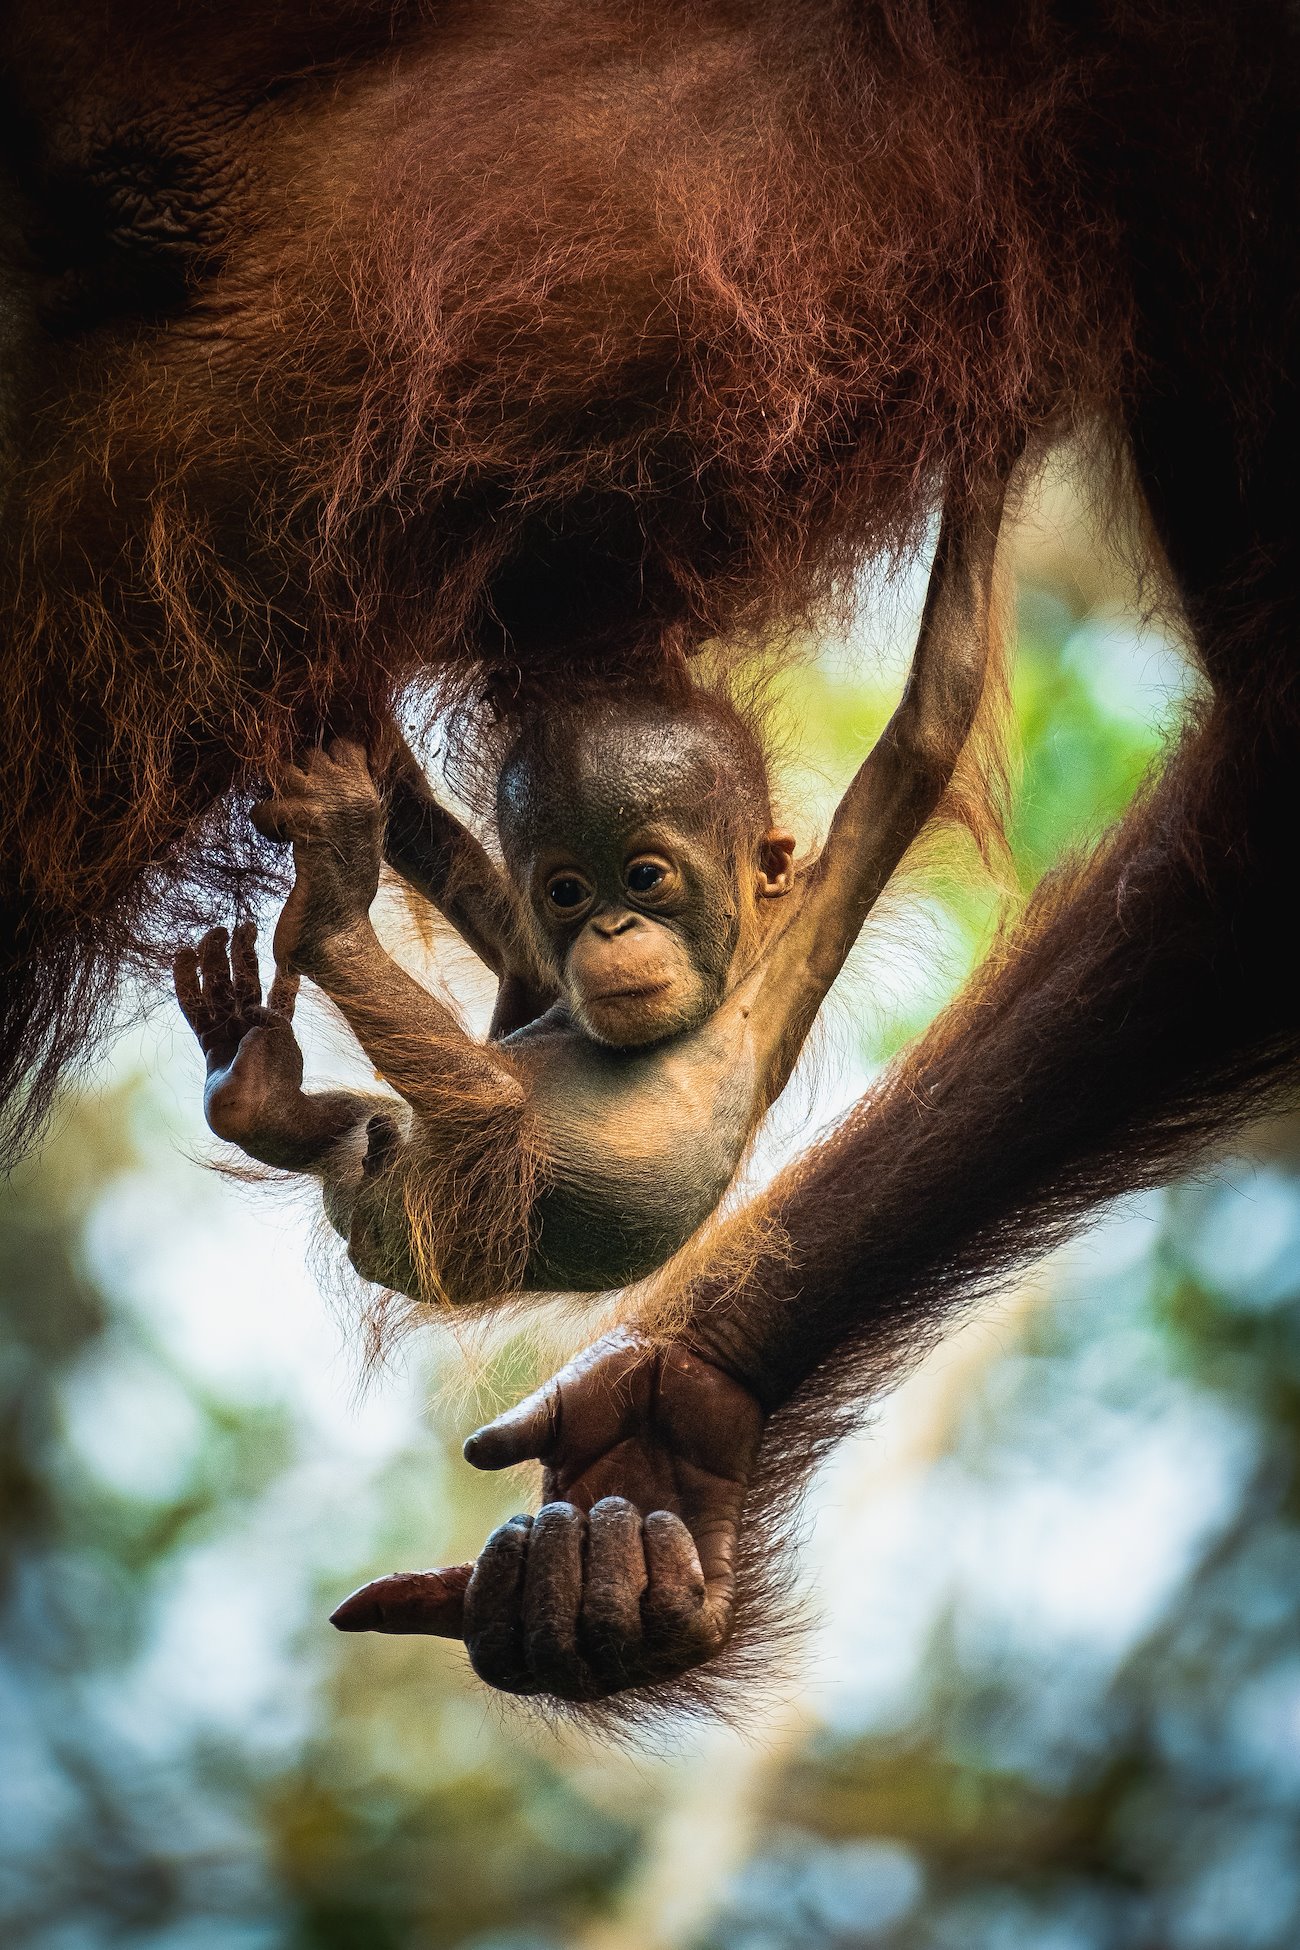 Baby and mother orangutan, Taman National Park, Central Kalimantan, Indonesia. Photo: Dimitry B/Unsplash.com